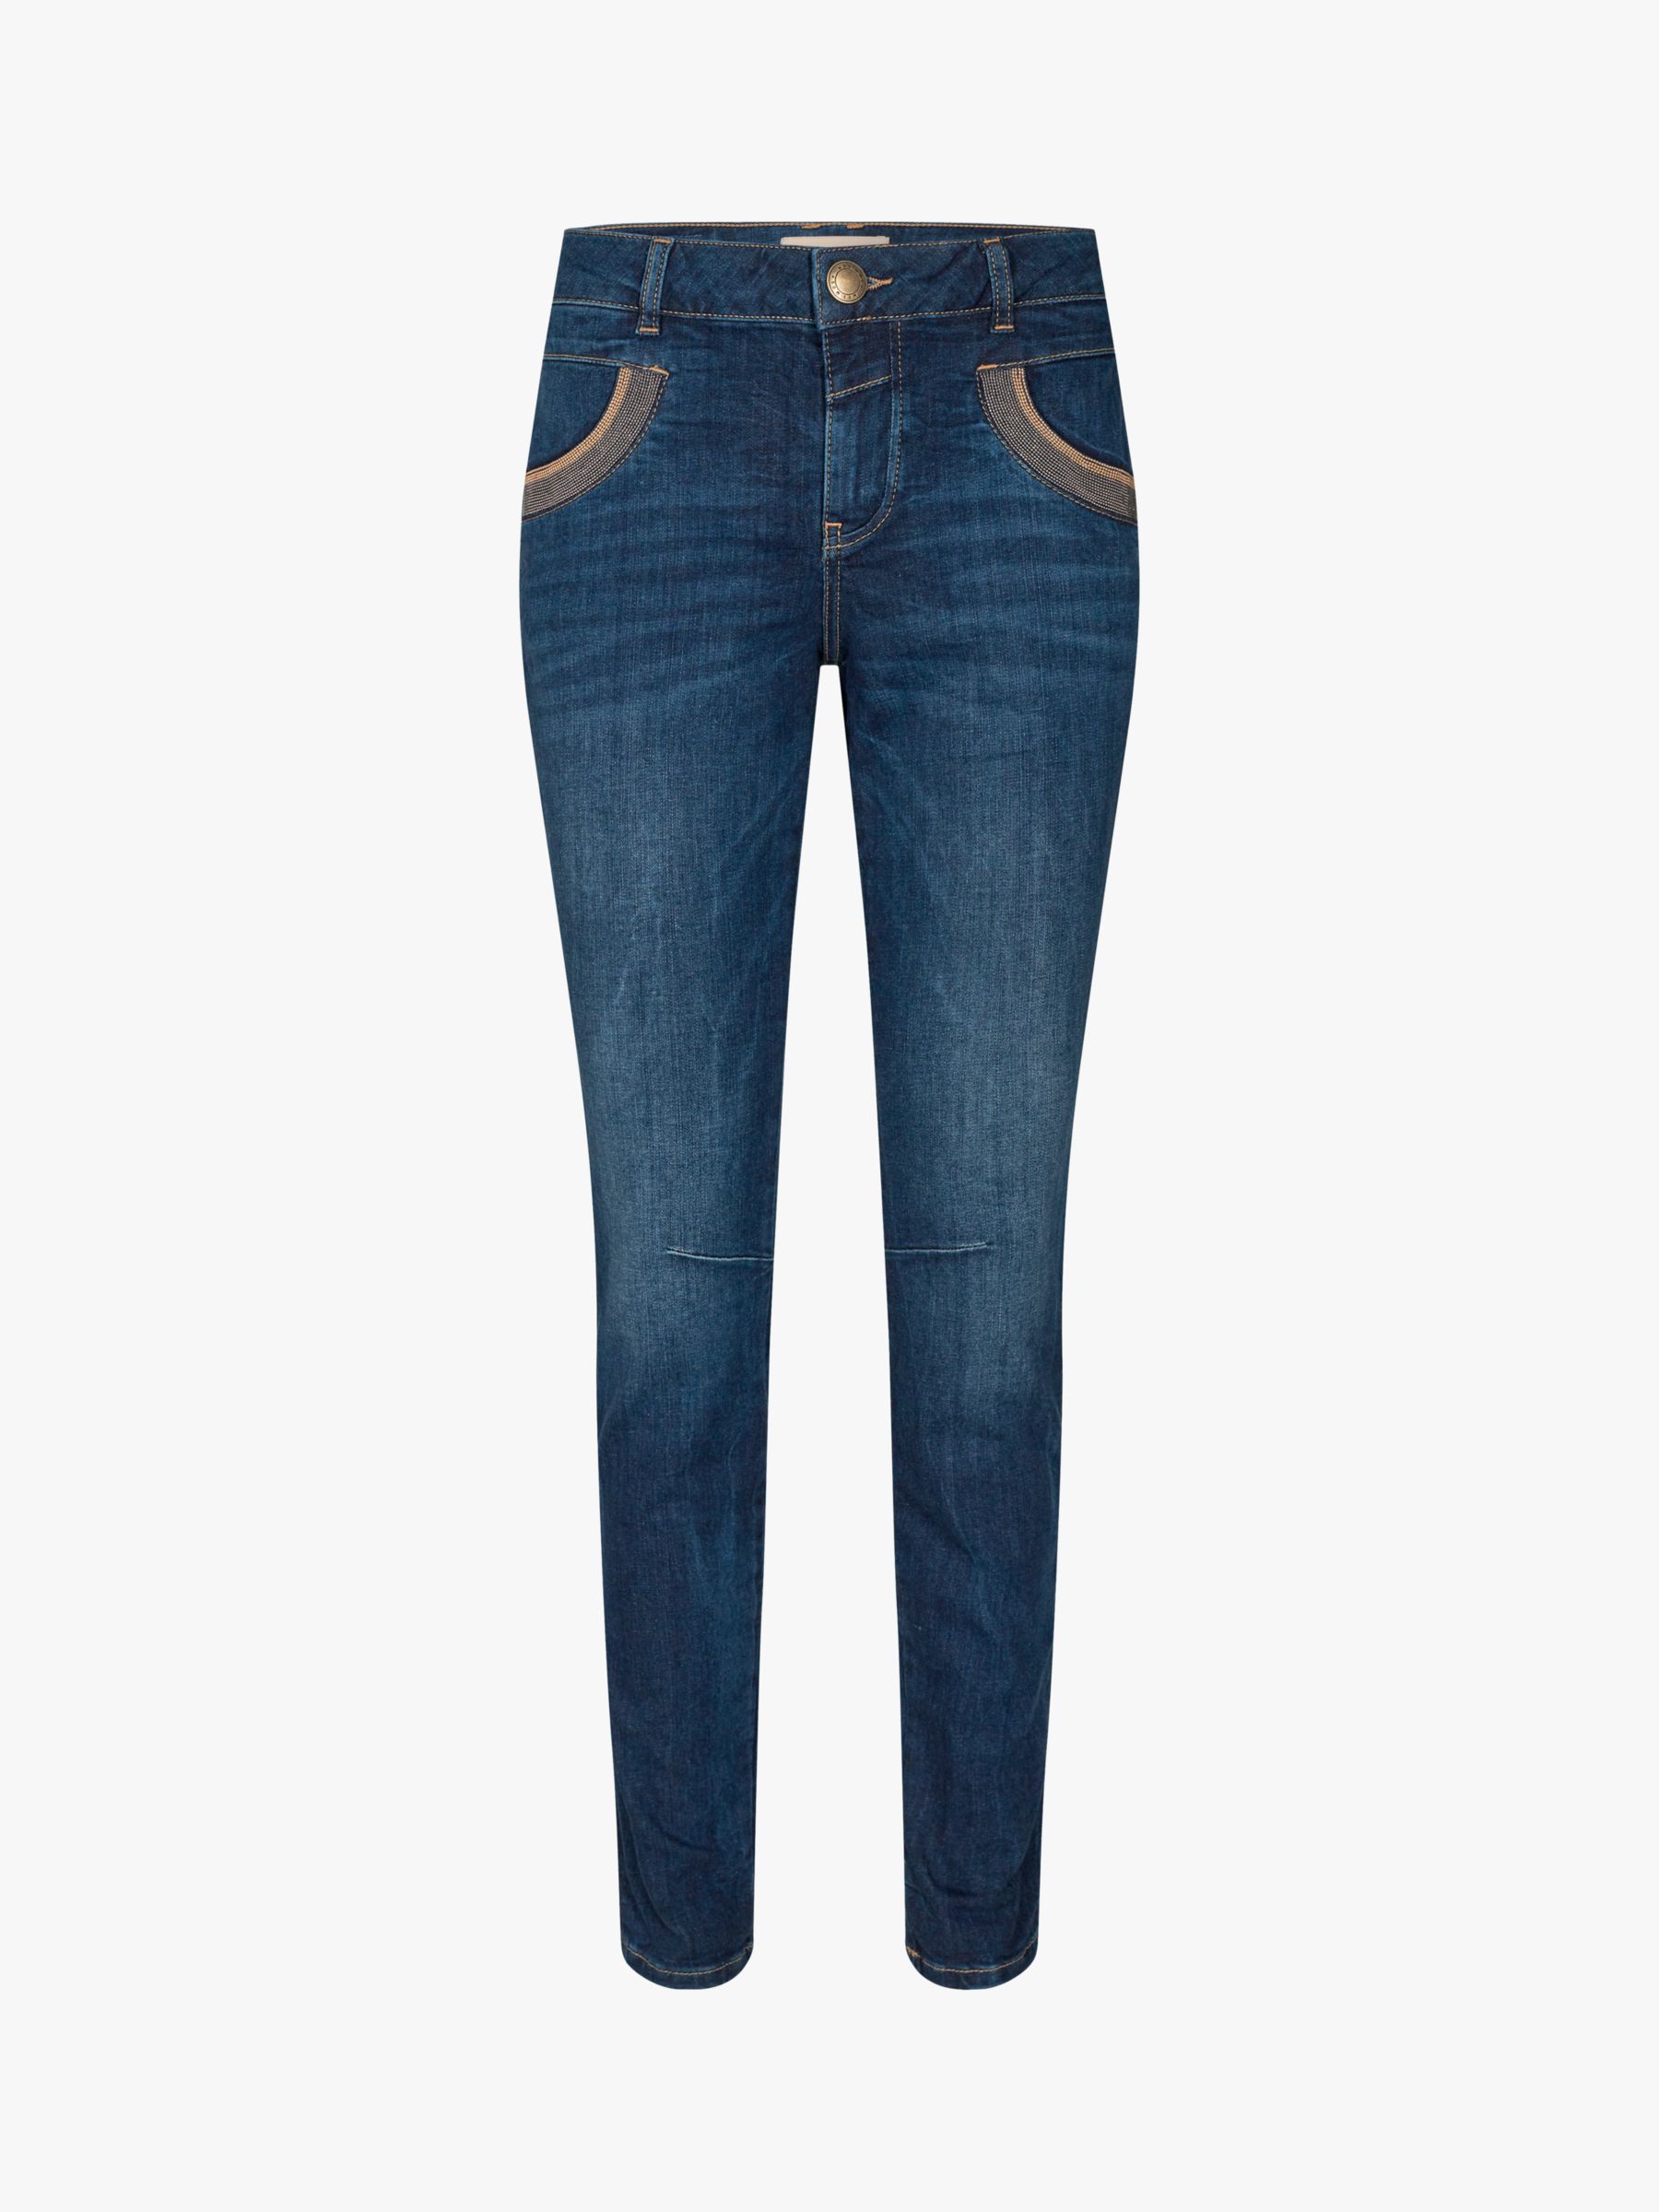 MOS MOSH Naomi Decorative Trim Slim Fit Jeans, Blue, 28R